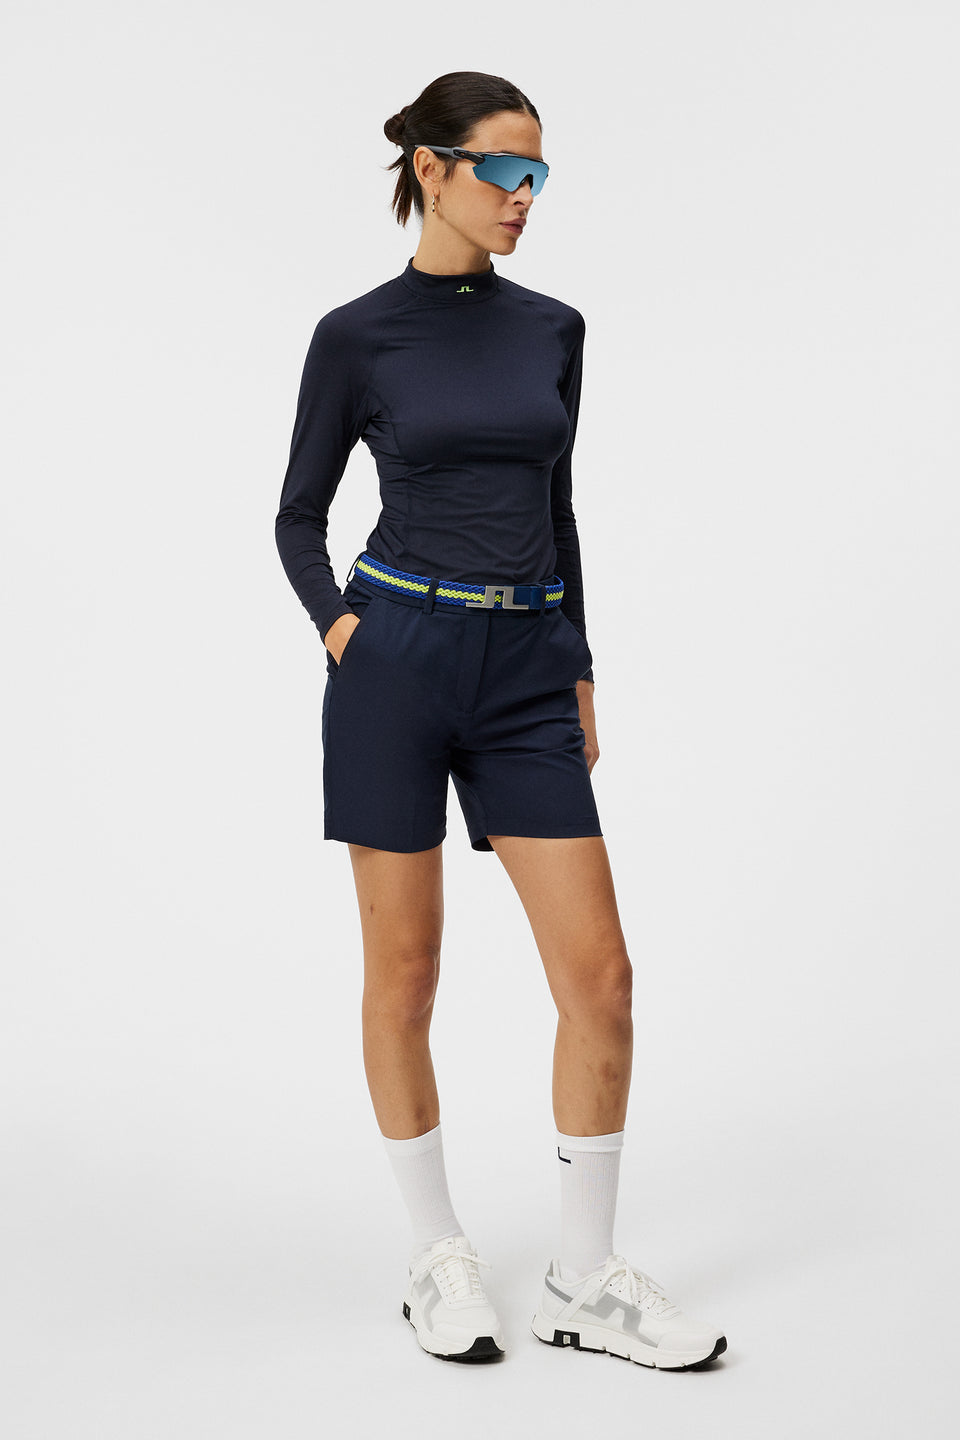 Gwen Long Shorts / JL Navy